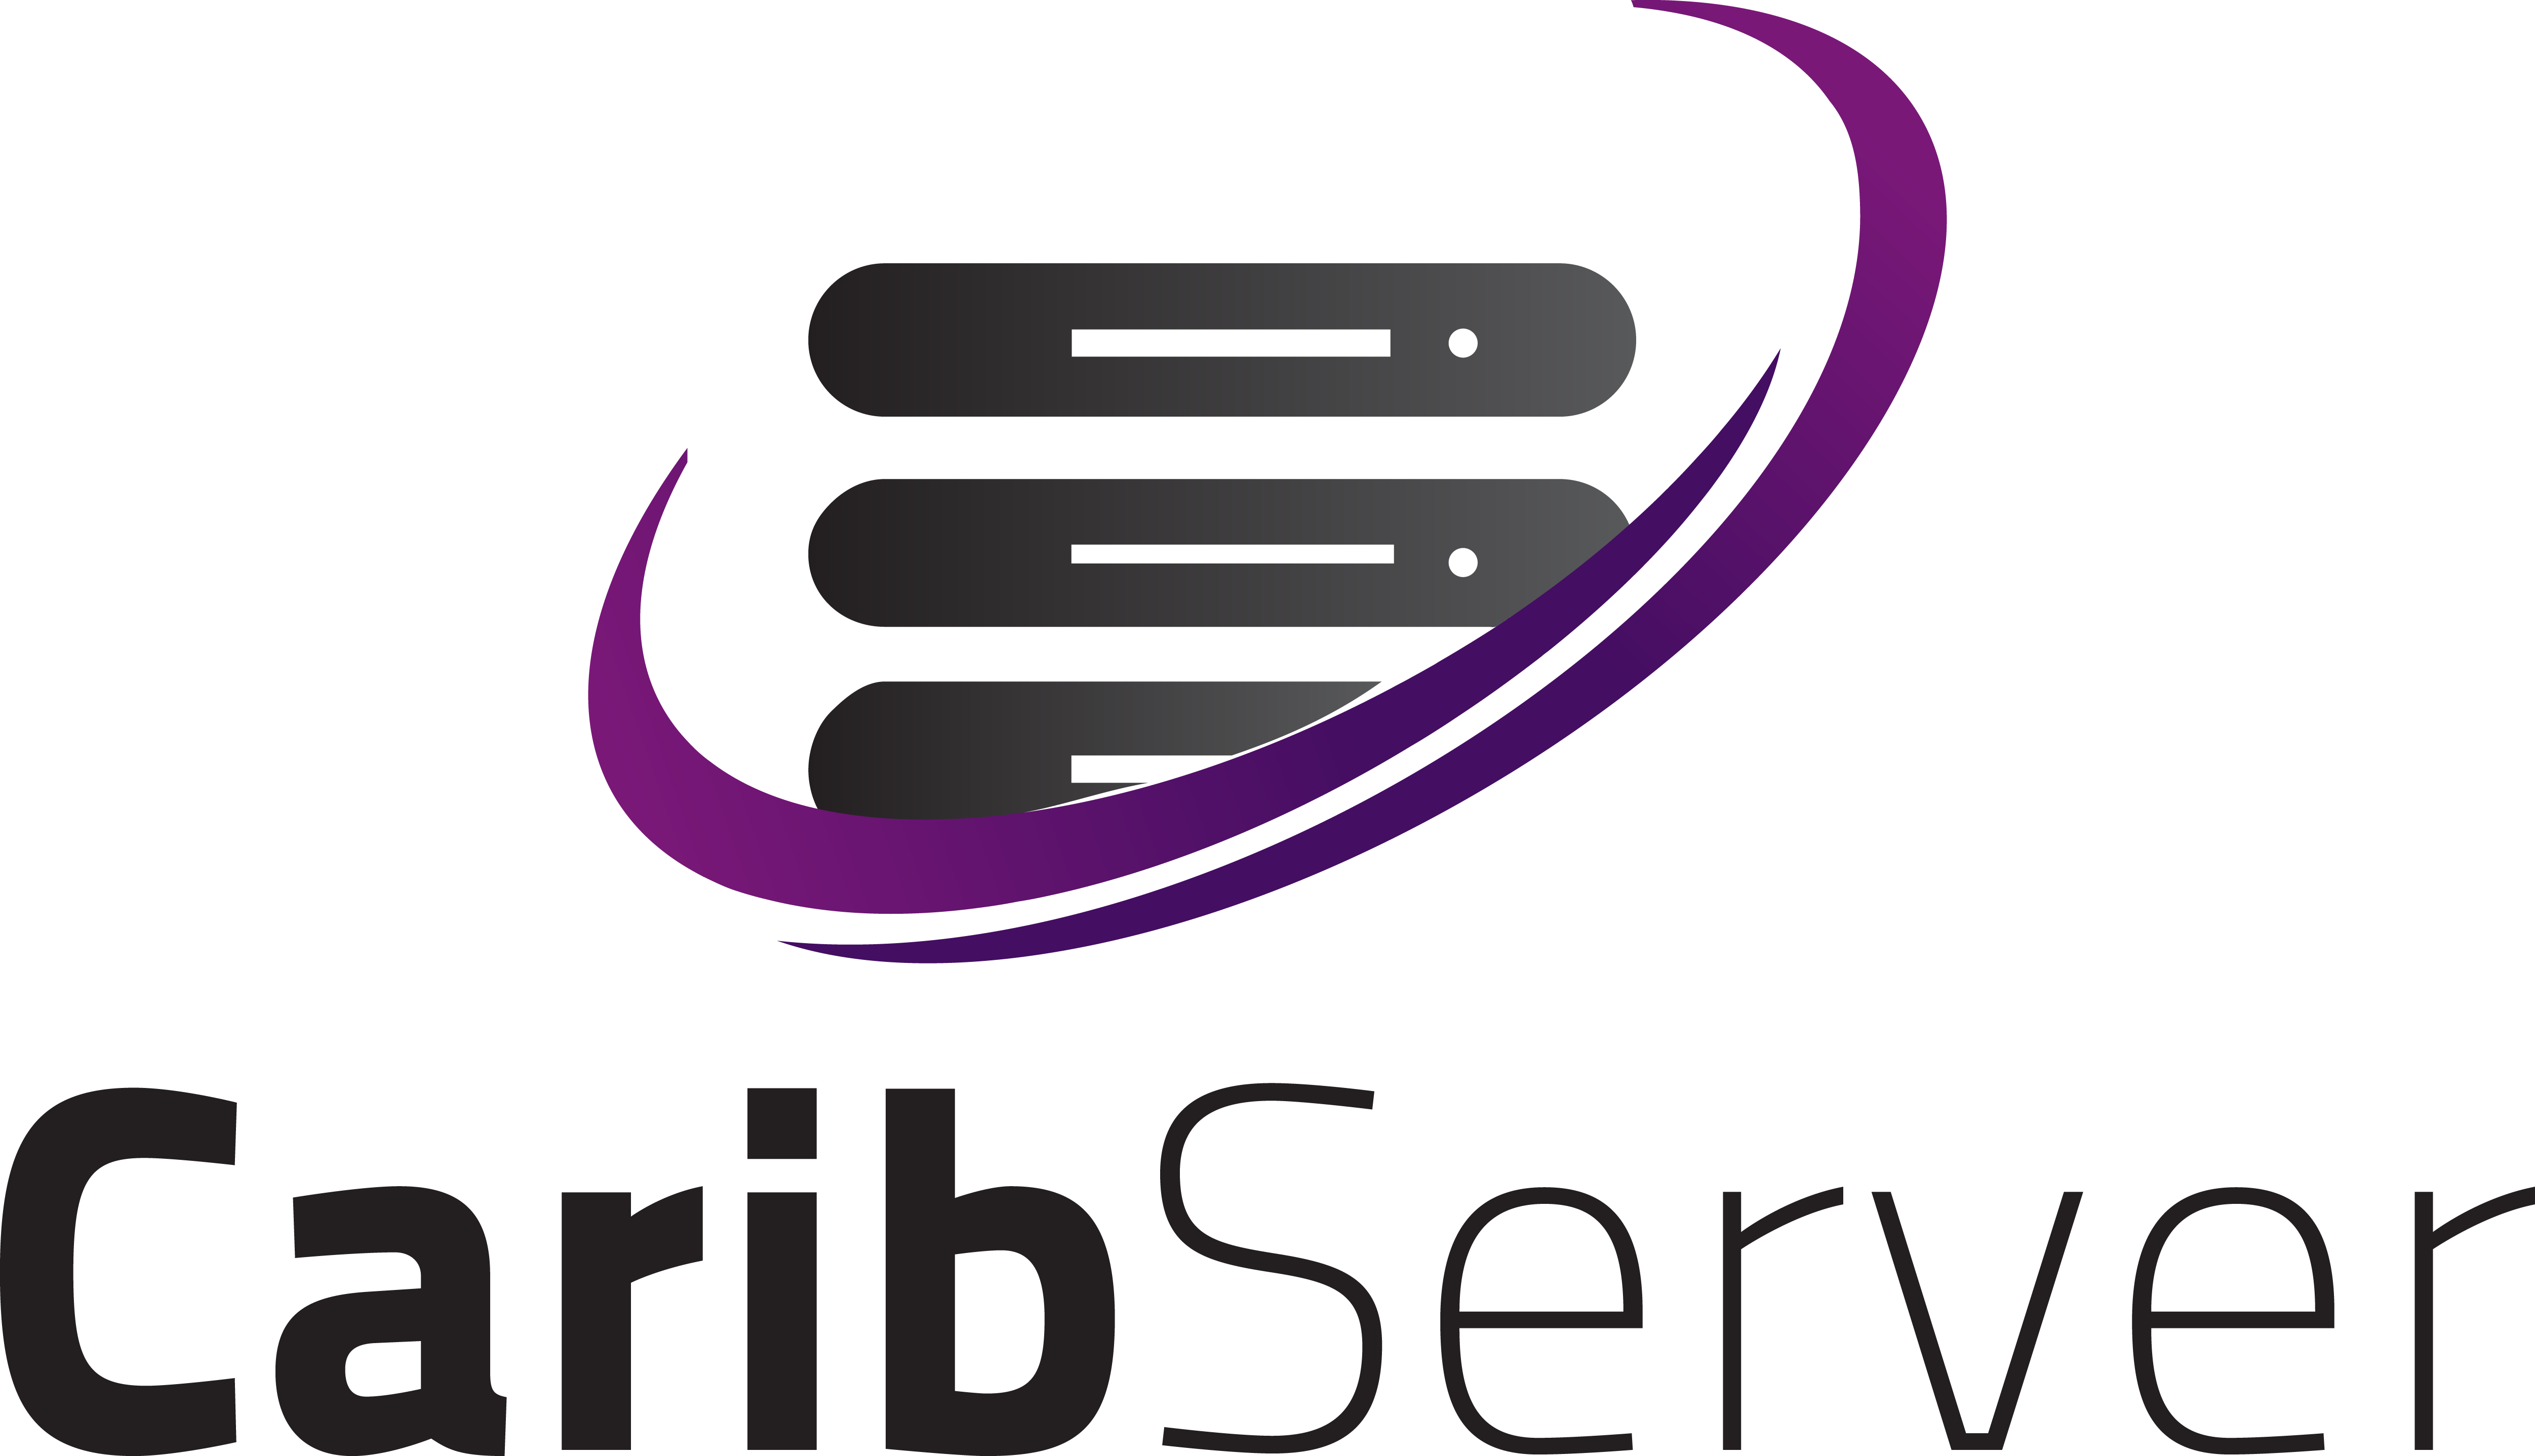 Carib-Server-vertical-version-full-color.png